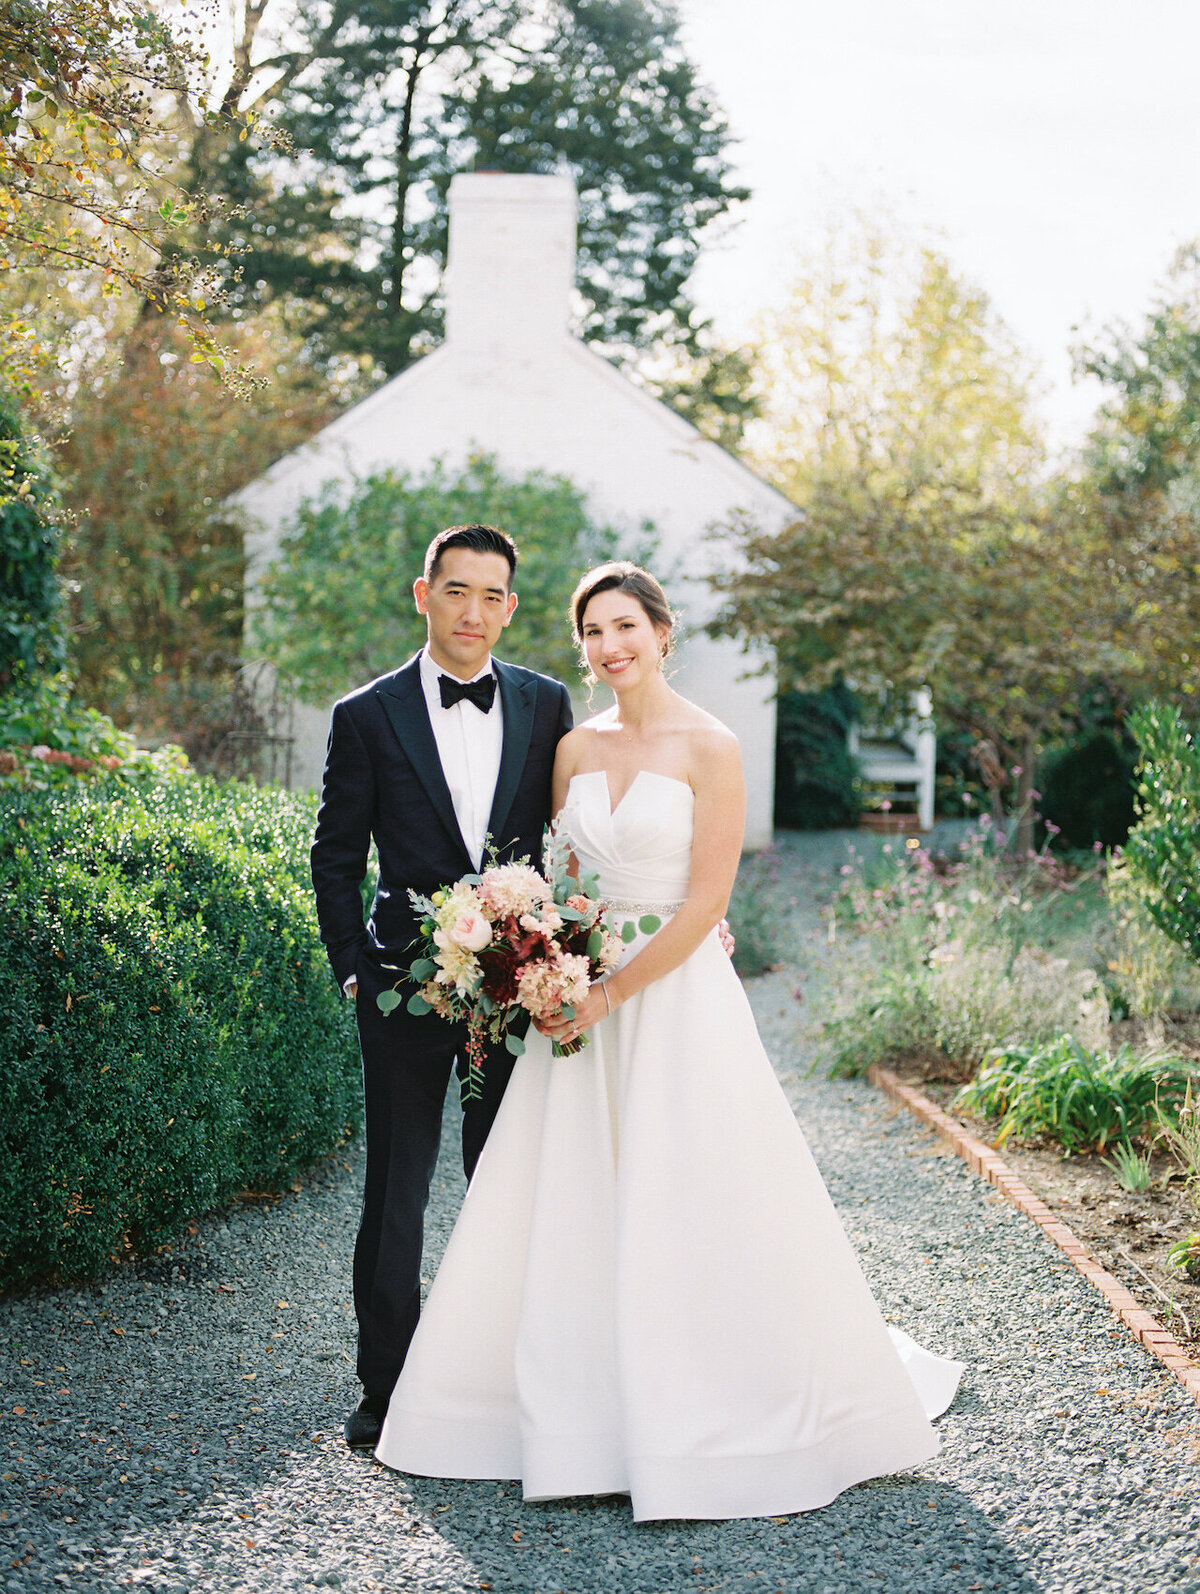 Outdoor Wedding Portraits Light and Airy Photographer Robert Aveau for © Bonnie Sen Photography